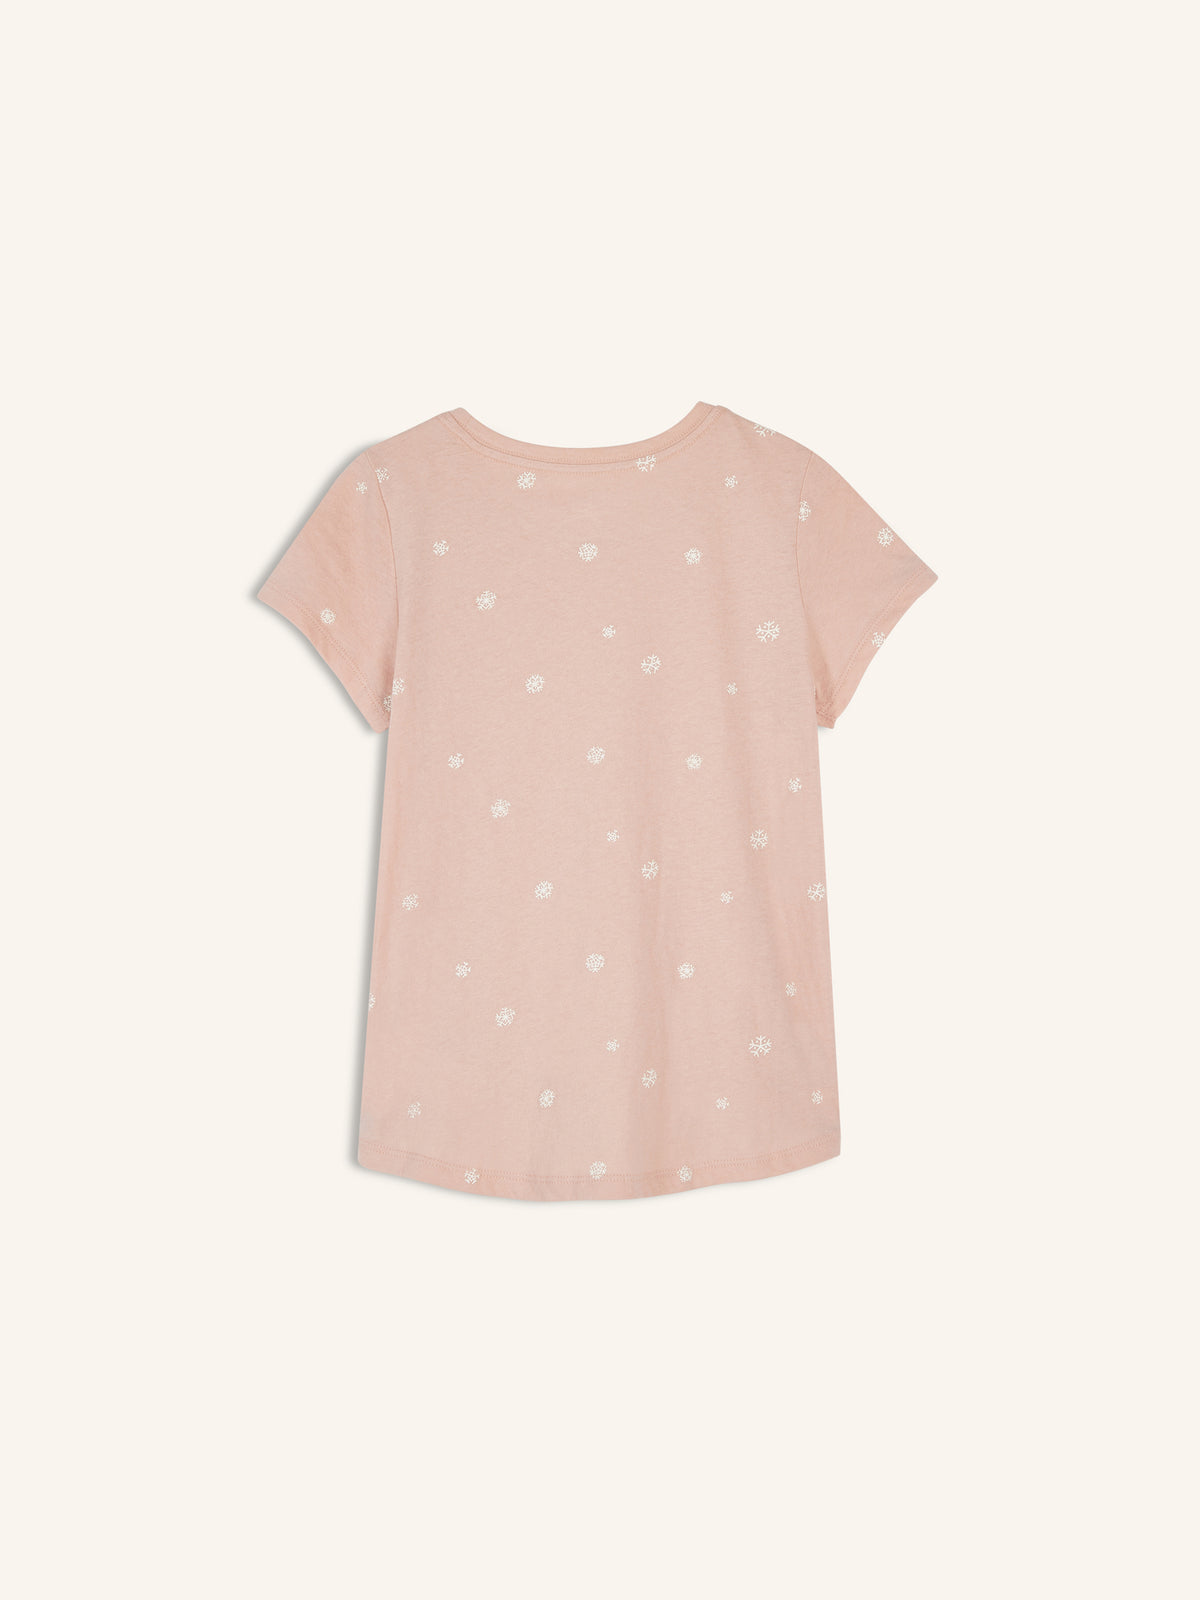 Softest Short-Sleeve Printed T-Shirt for Girls